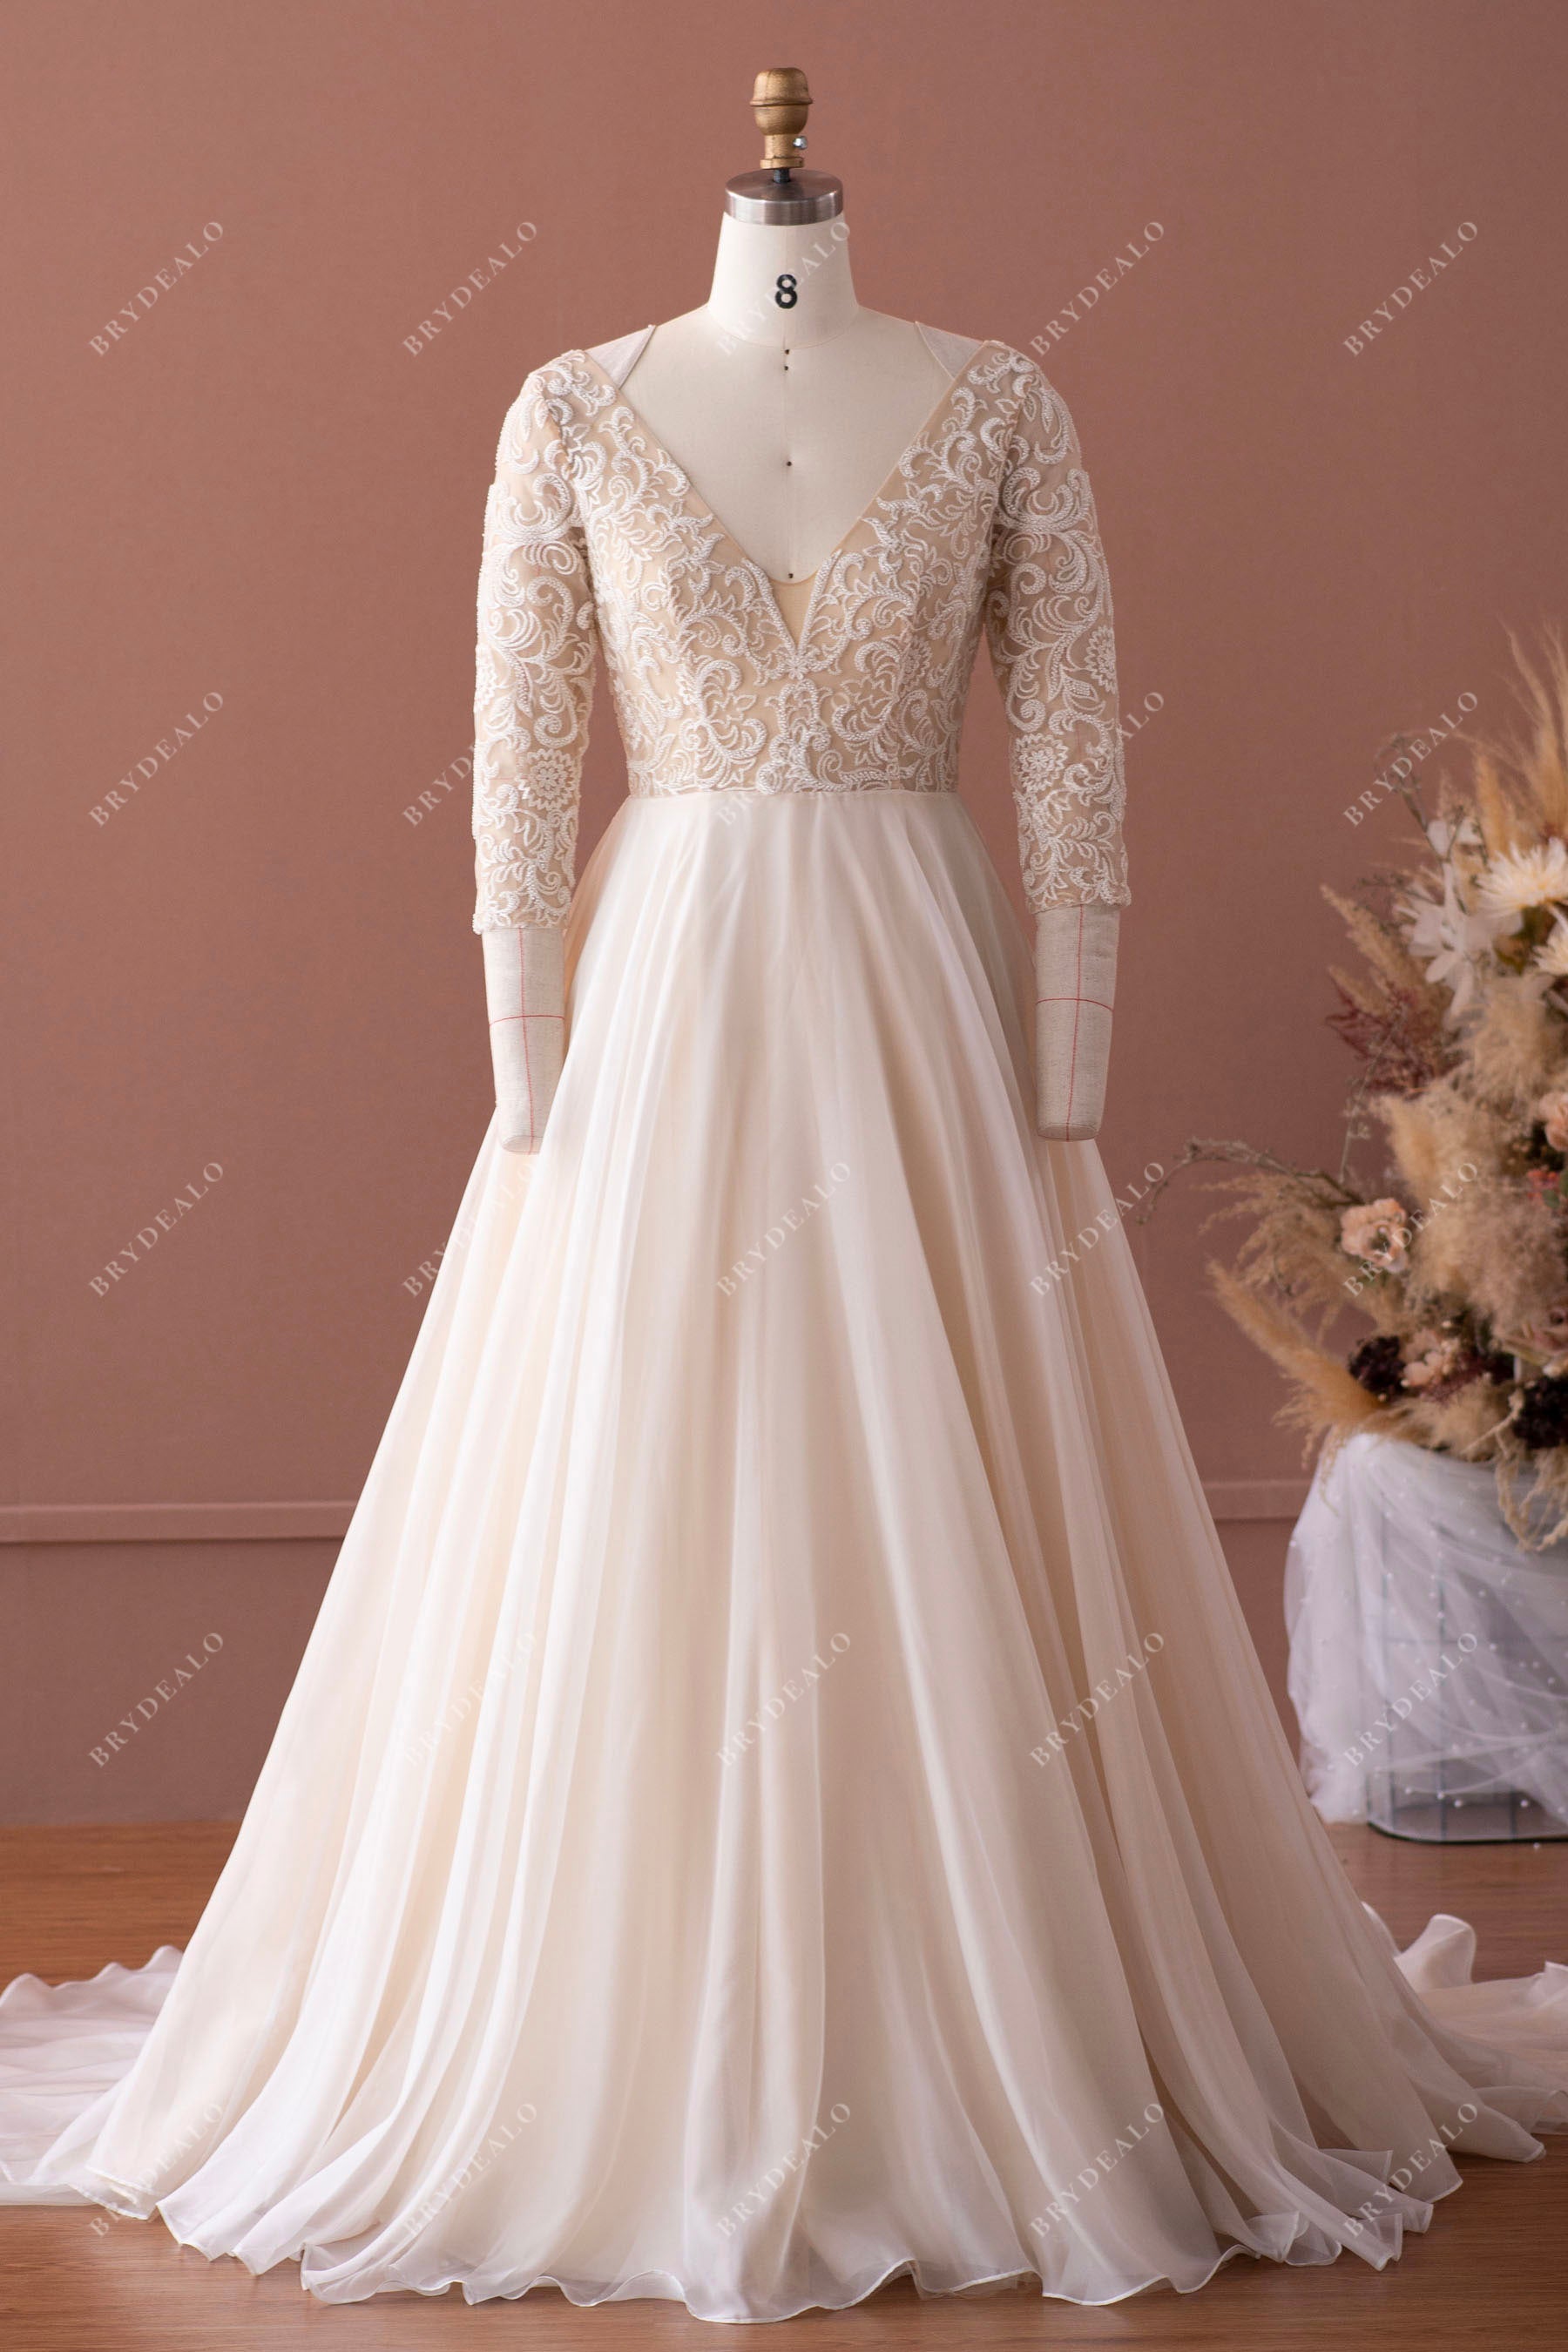 V-neck illusion sleeved beaded lace organza wedding dress